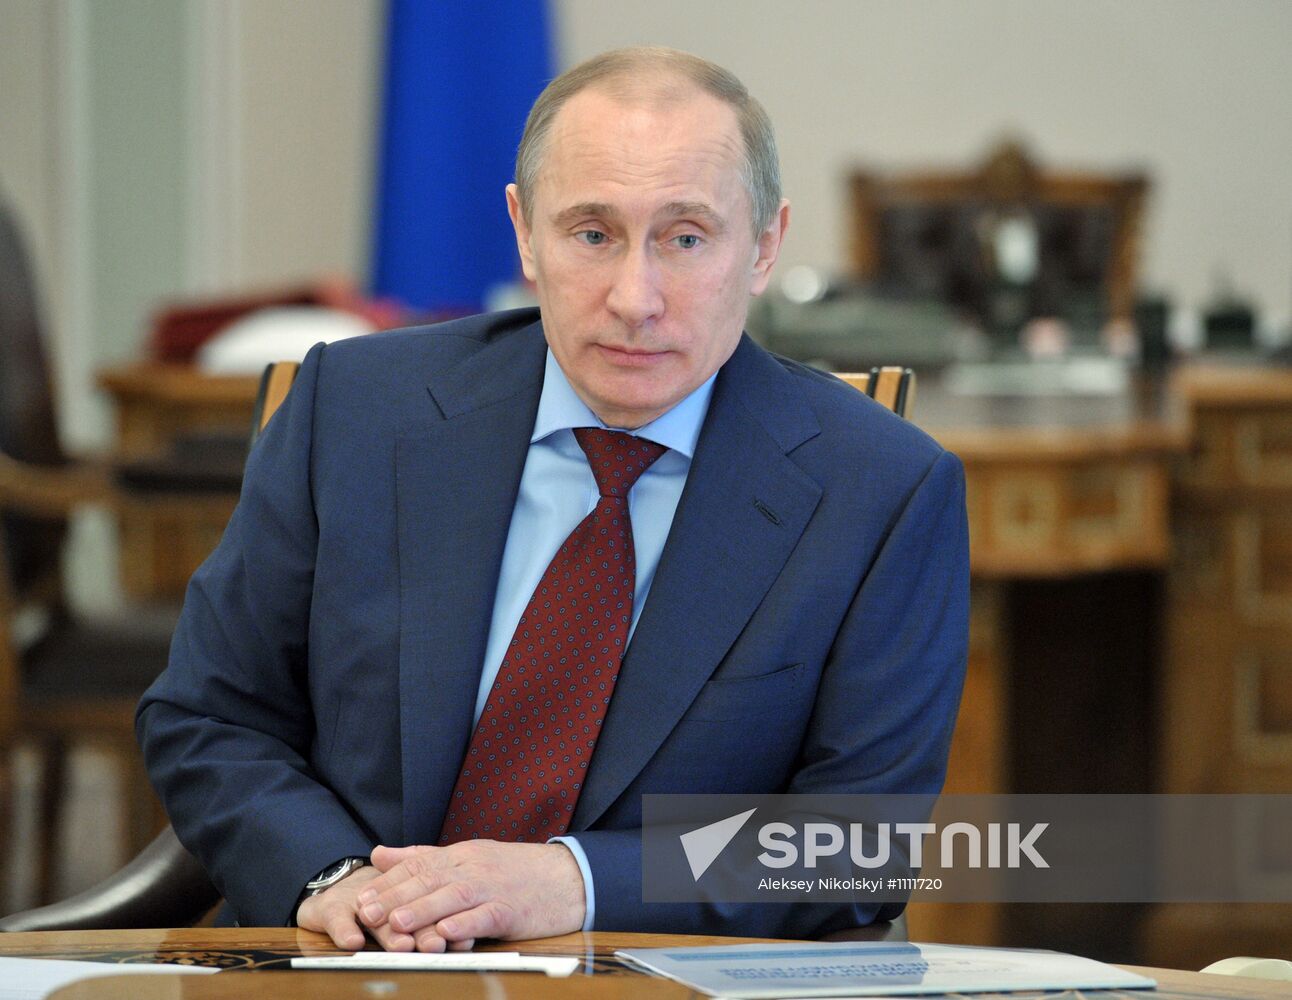 Vladimir Putin holds meeting at Novo-Ogaryovo